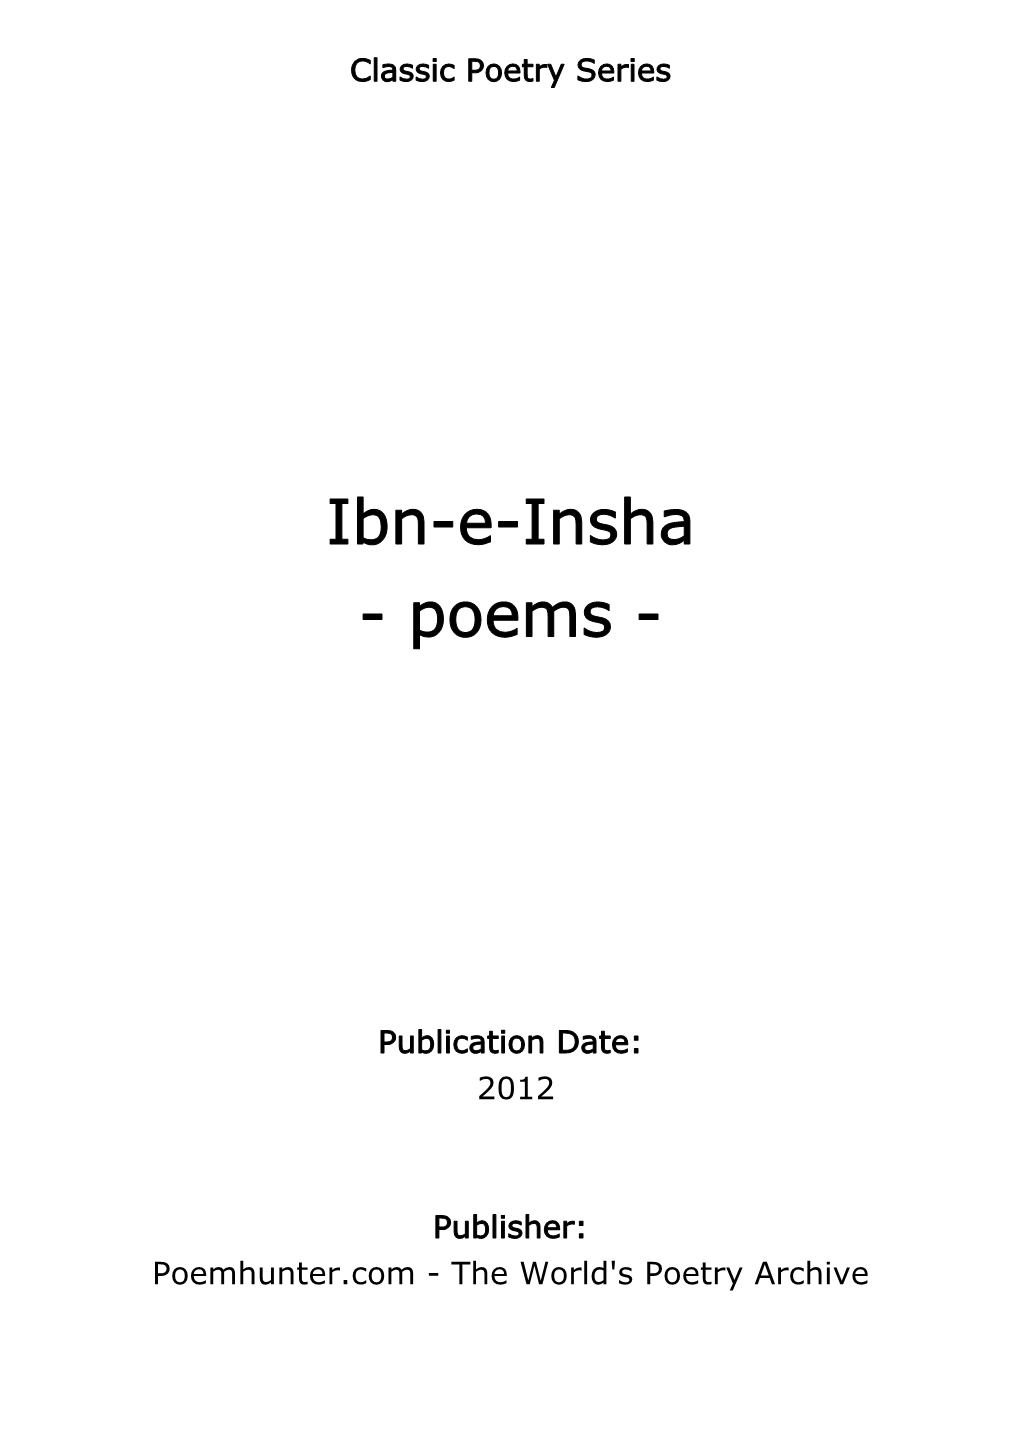 Ibn-E-Insha - Poems